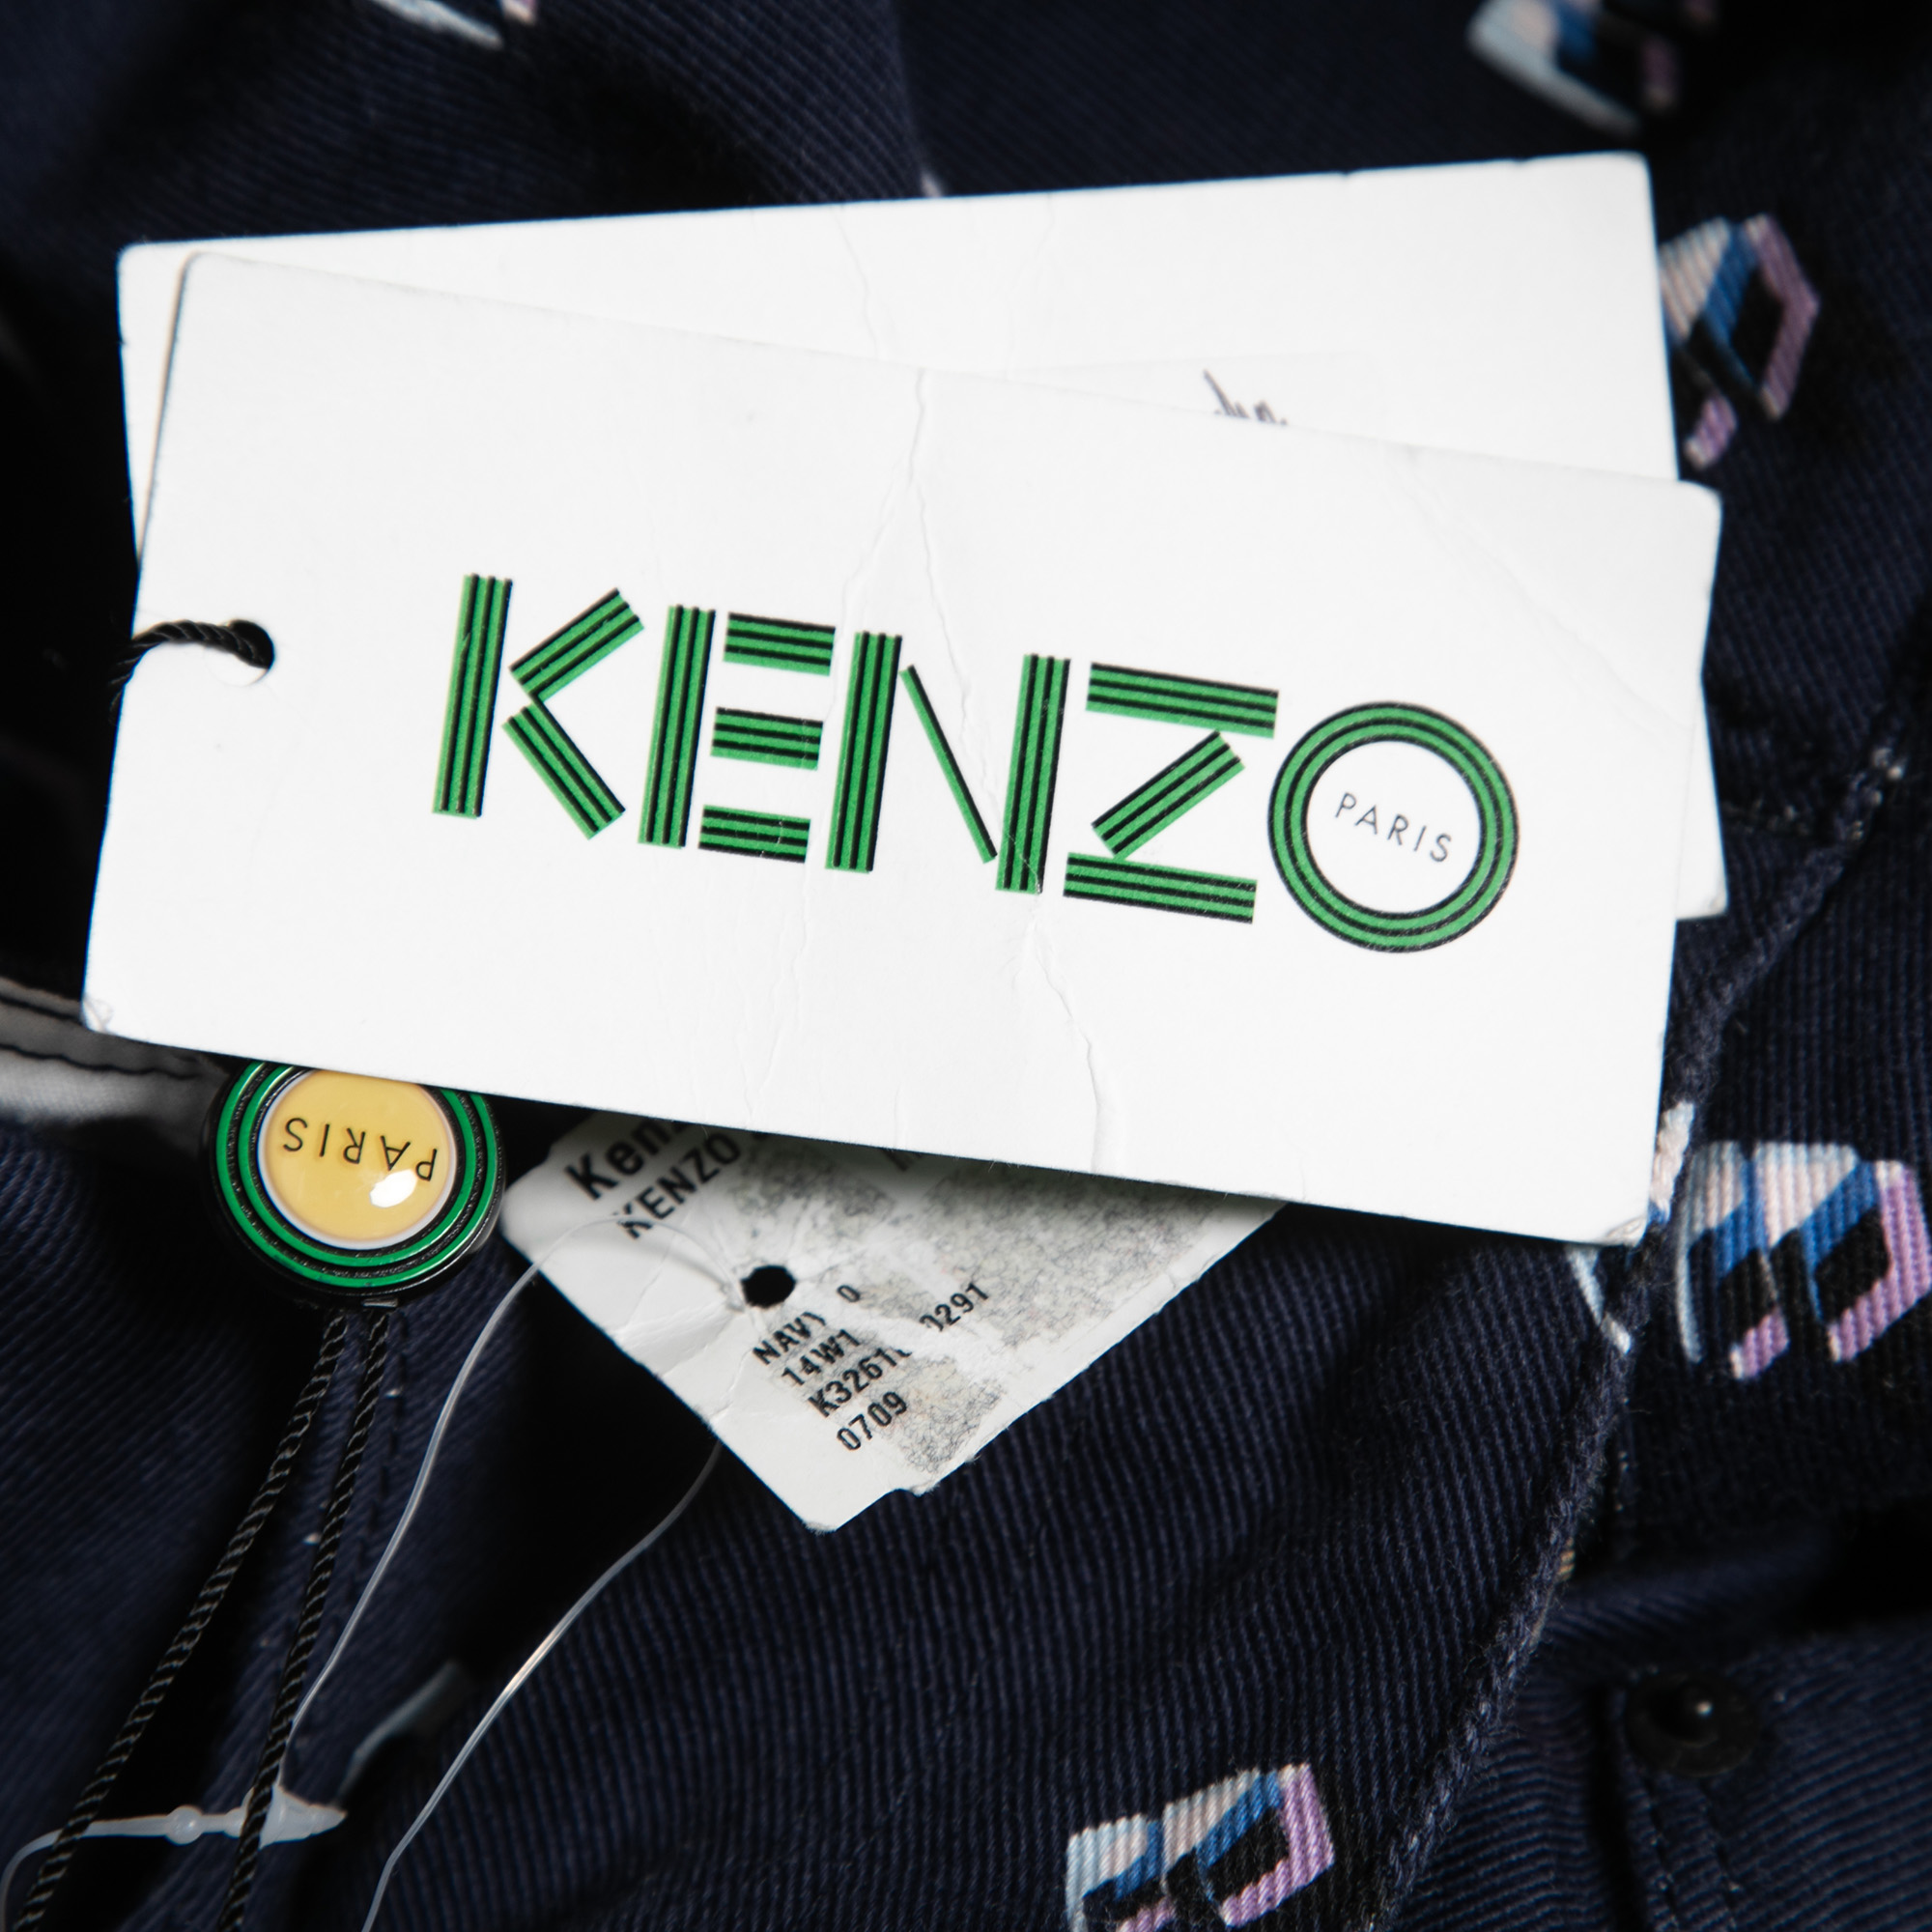 Kenzo Dark Blue Print Denim Jeans M Waist 30